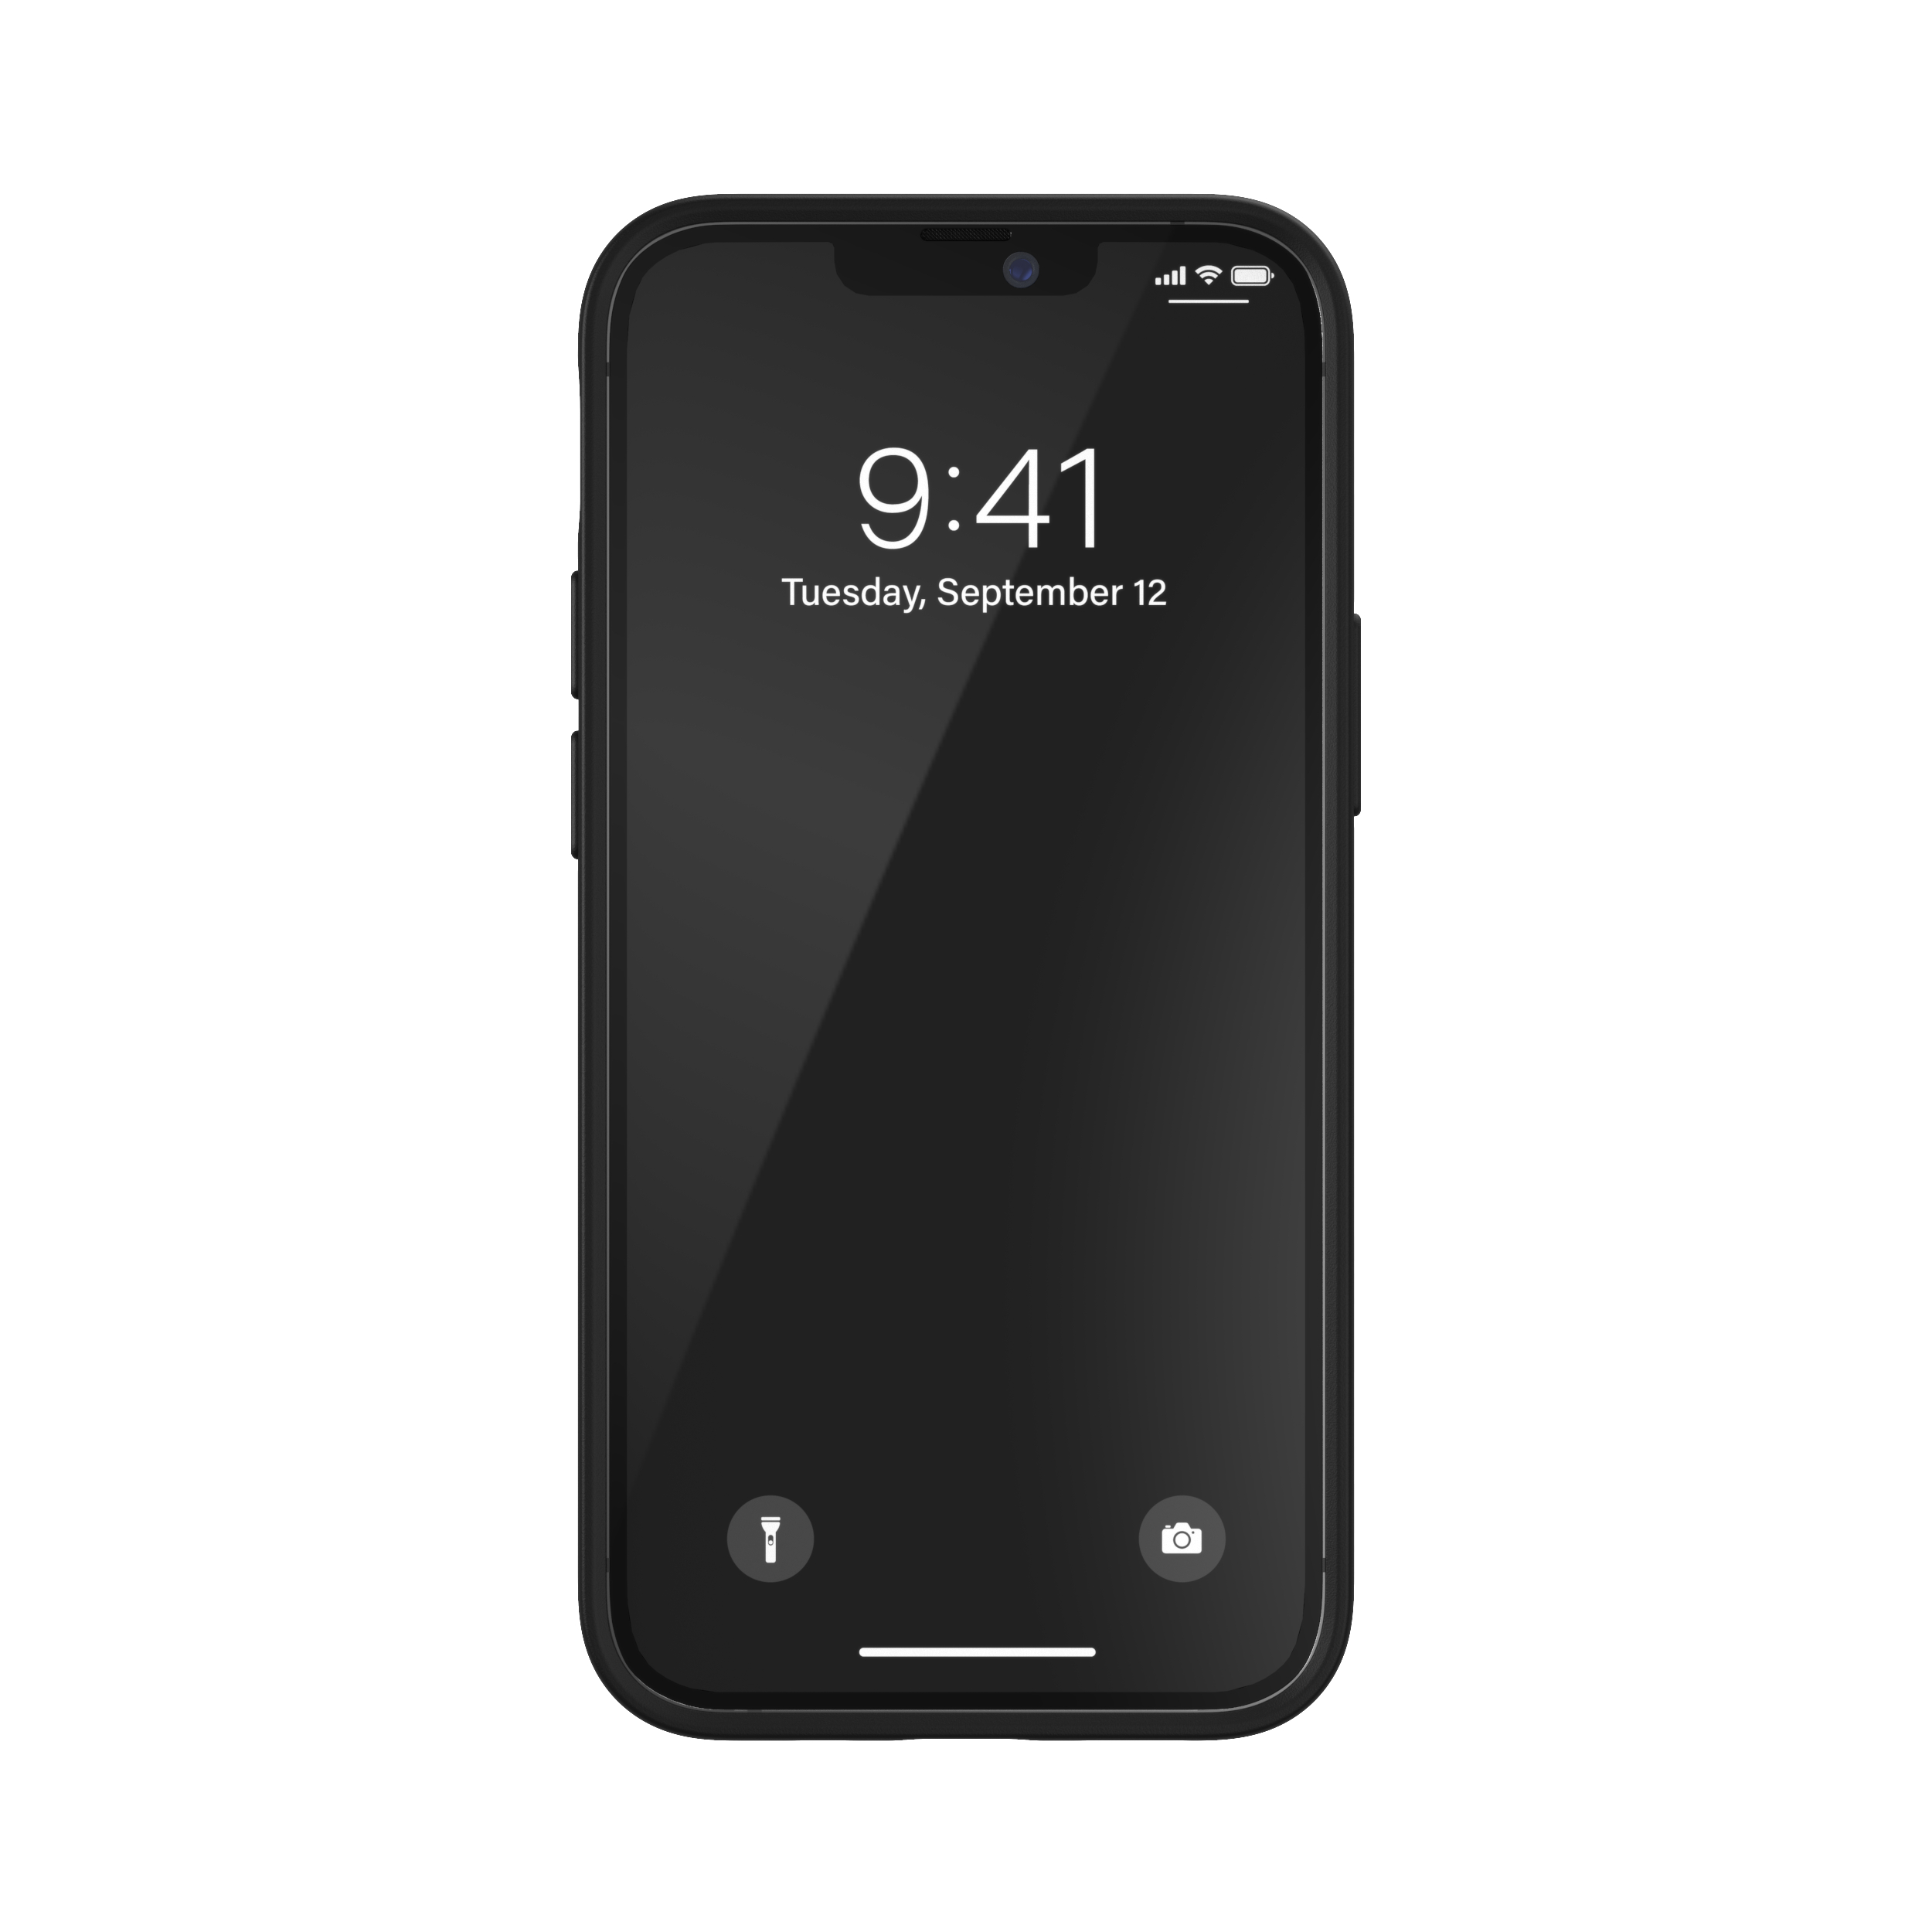 Moulded 12 Case, Schwarz/Weiß iPhone Mini, Backcover, ADIDAS ORIGINALS Apple,